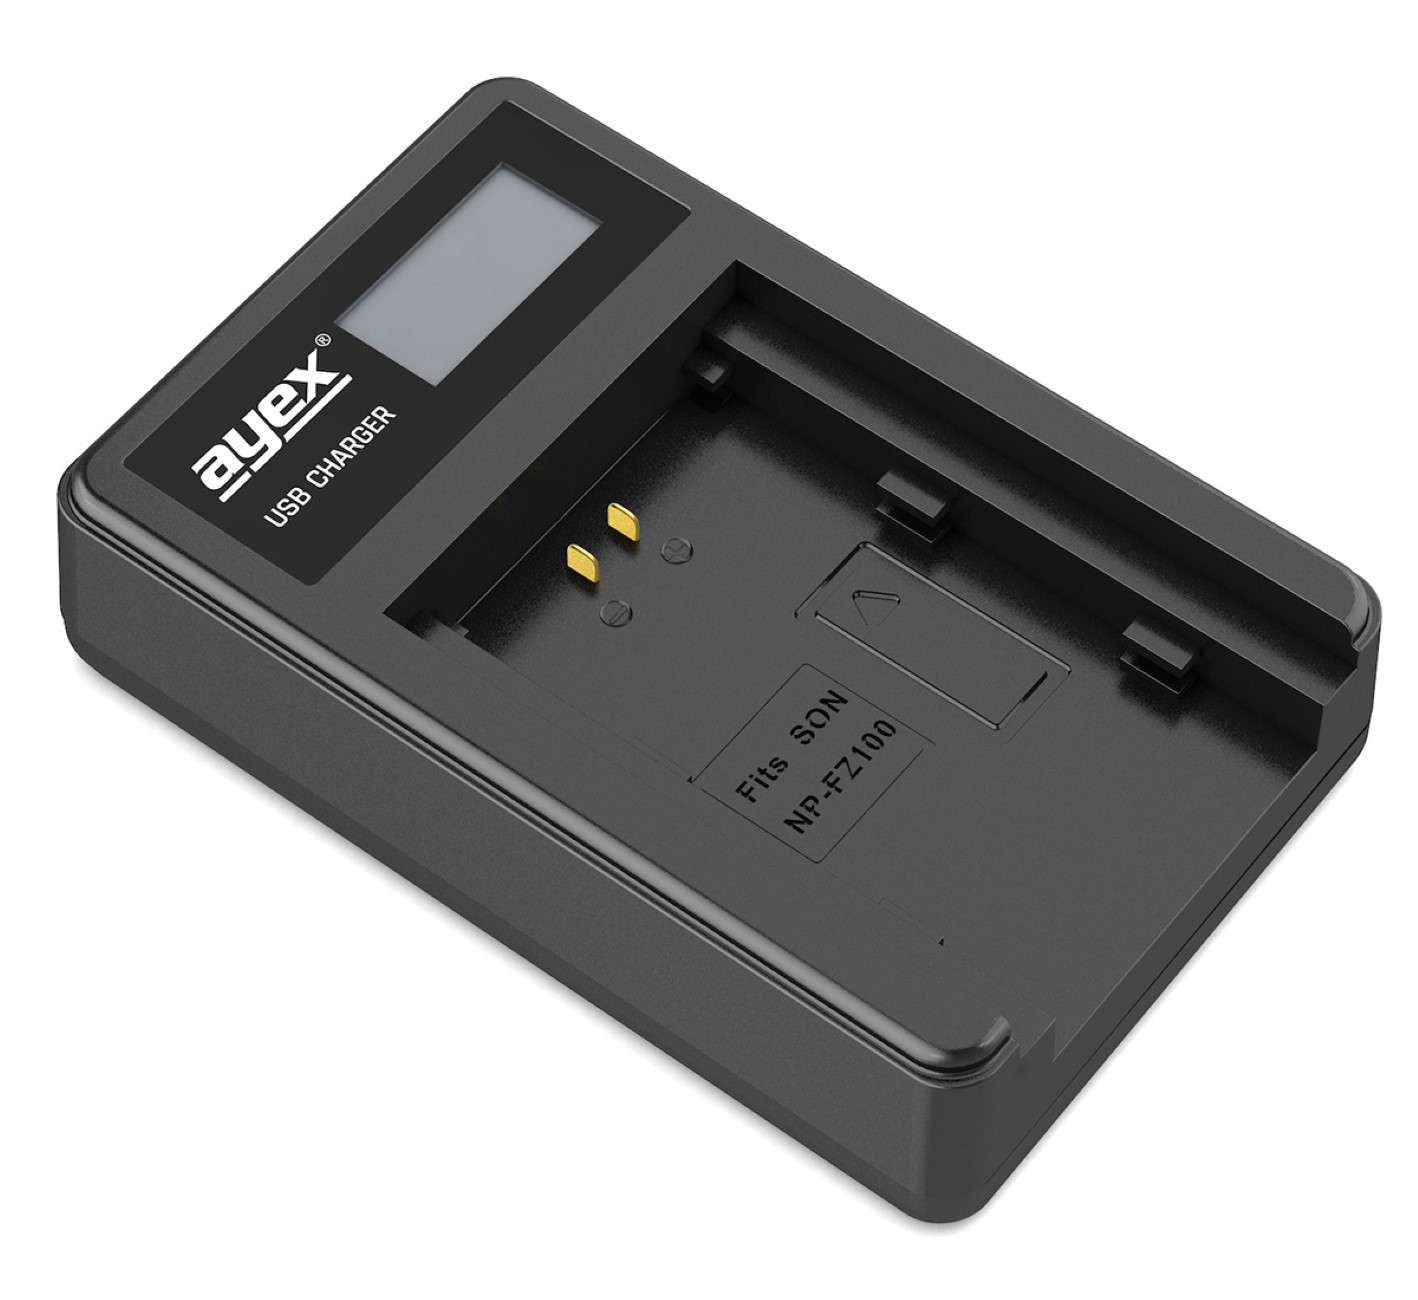 ayex USB Ladegerät für Sony NP-FZ100 Akku